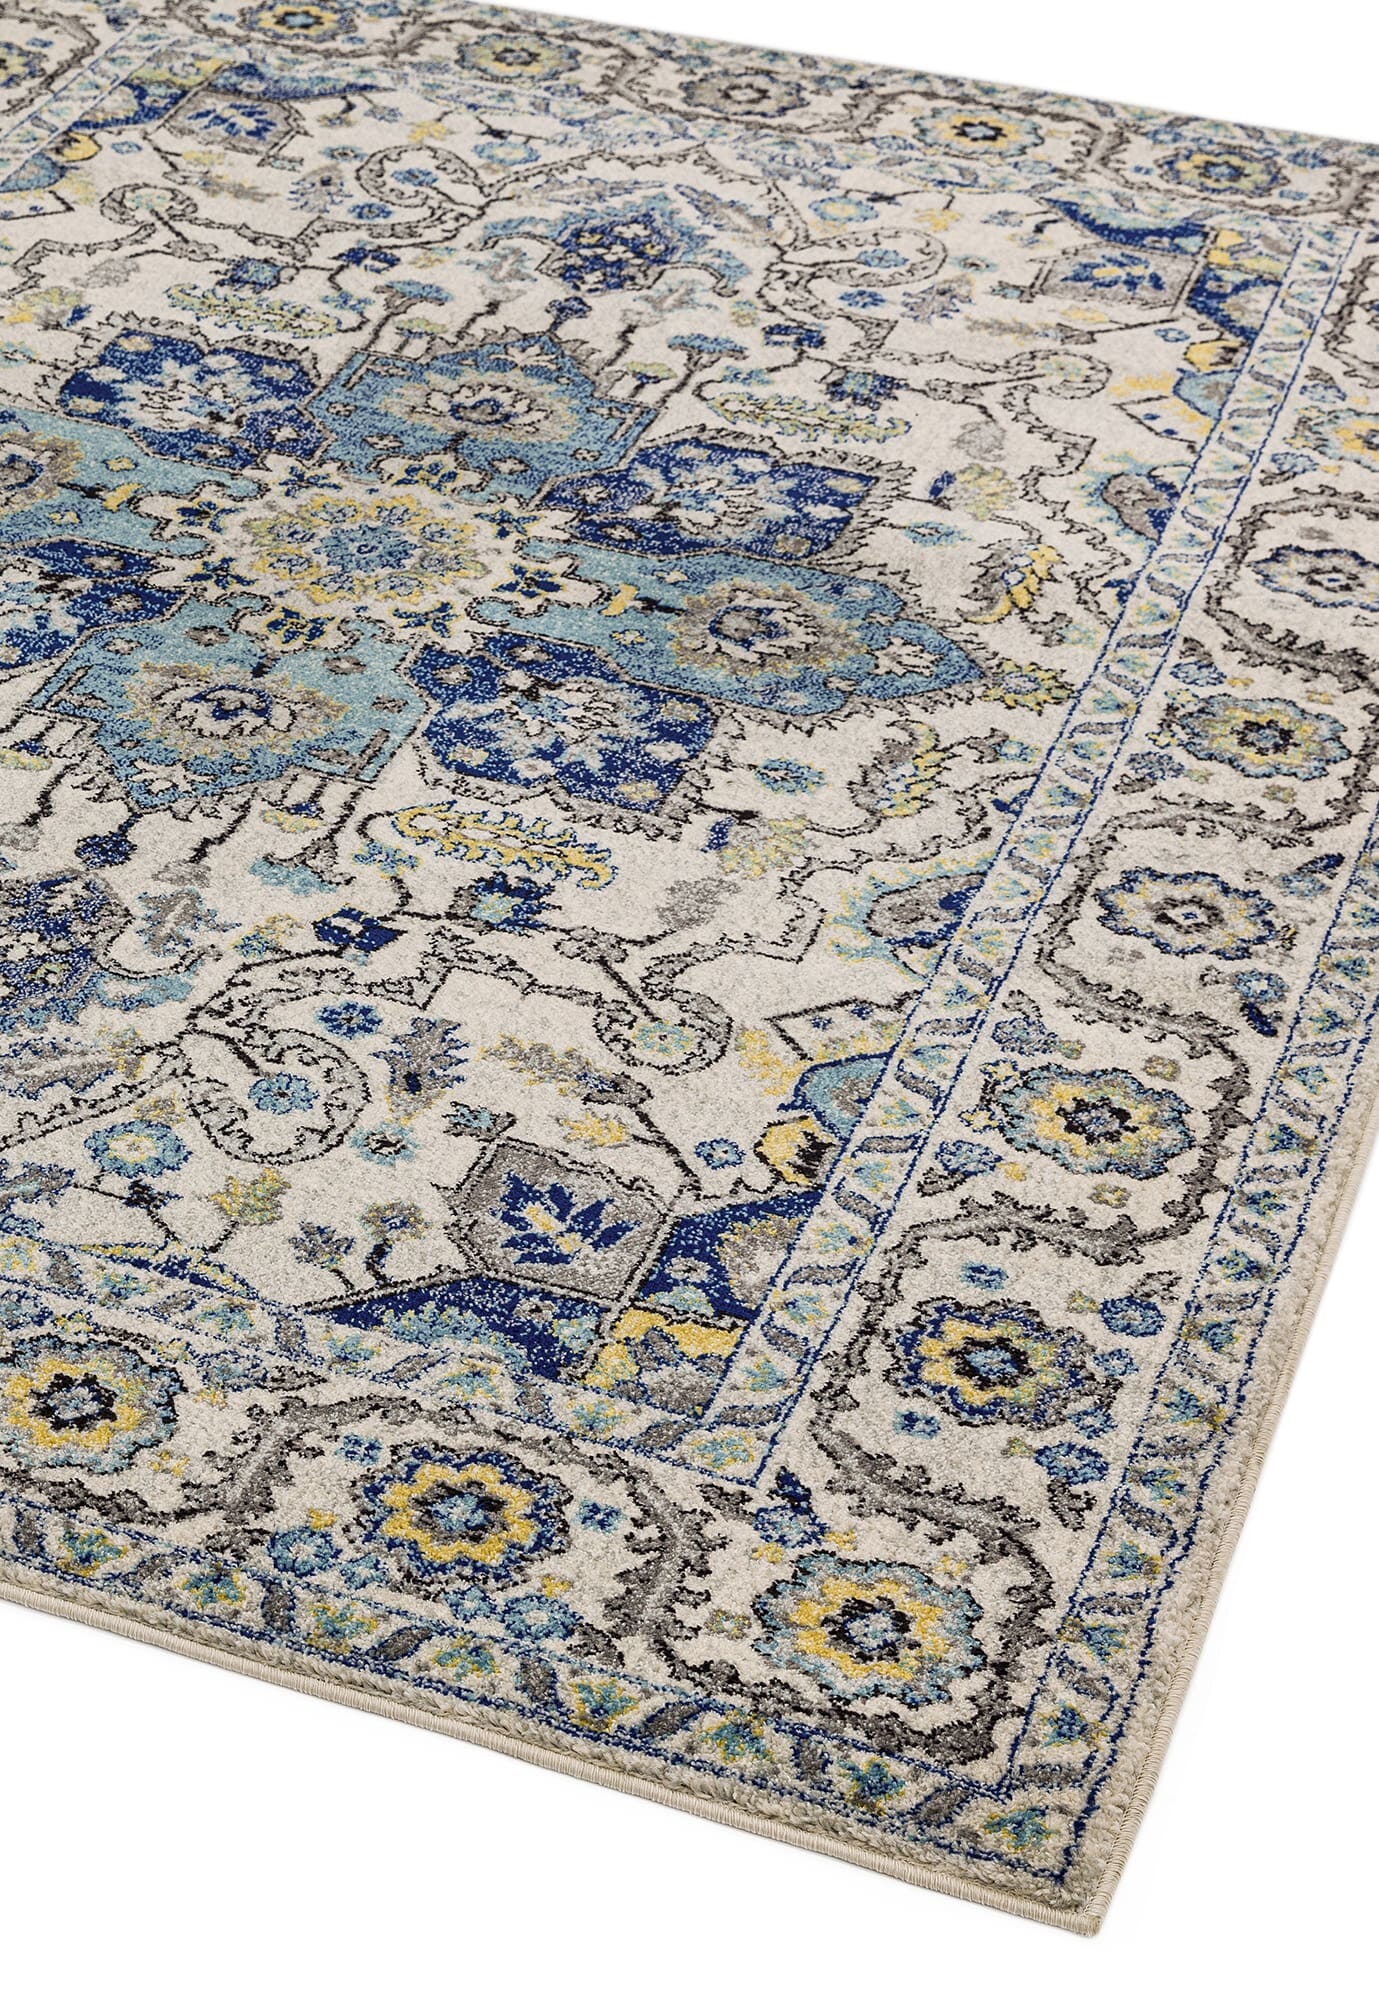 Asiatic Carpets Nova Machine Woven Rug Persian Blue - 200 x 290cm